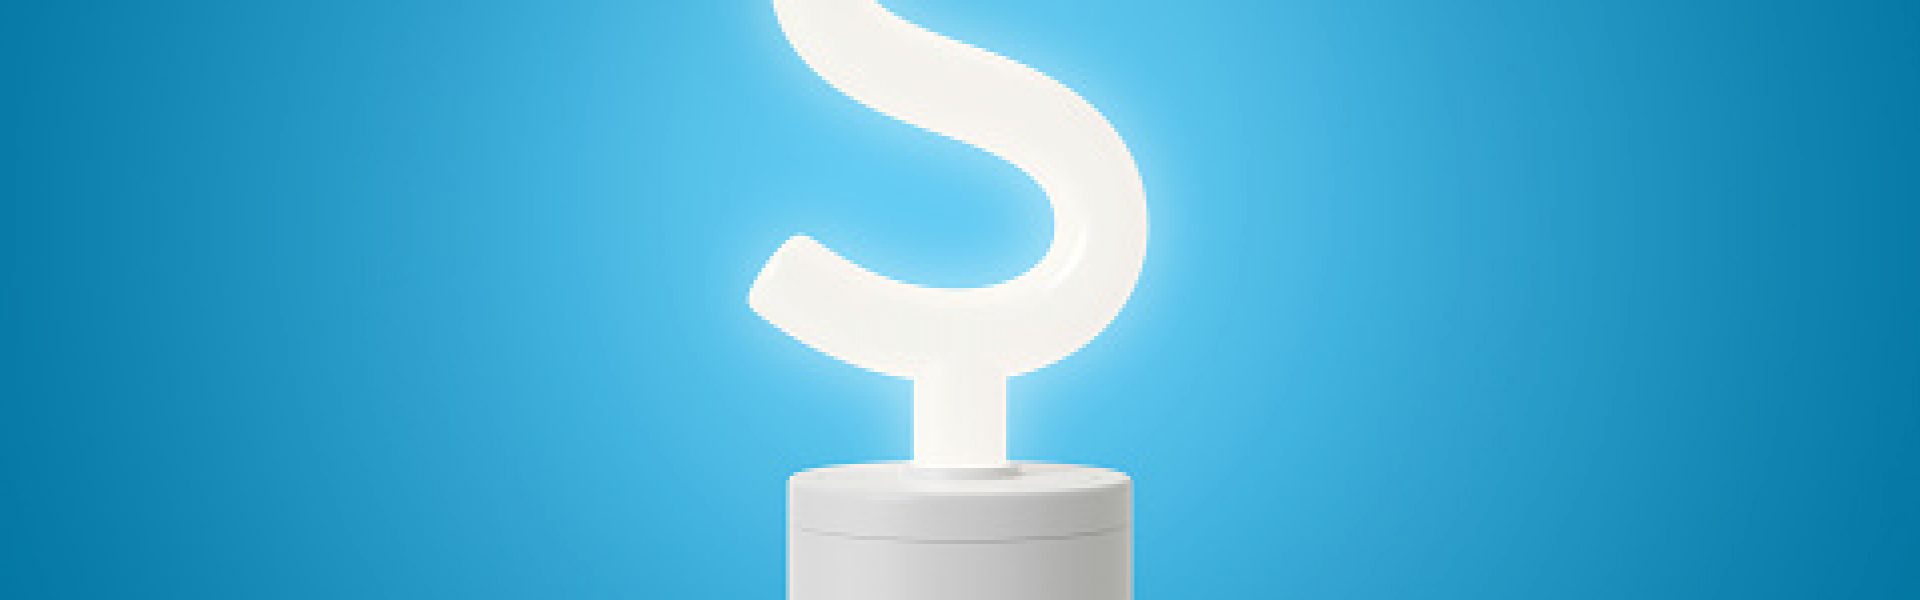 Energy Efficient Dollar Sign Light Bulb on a Blue Background